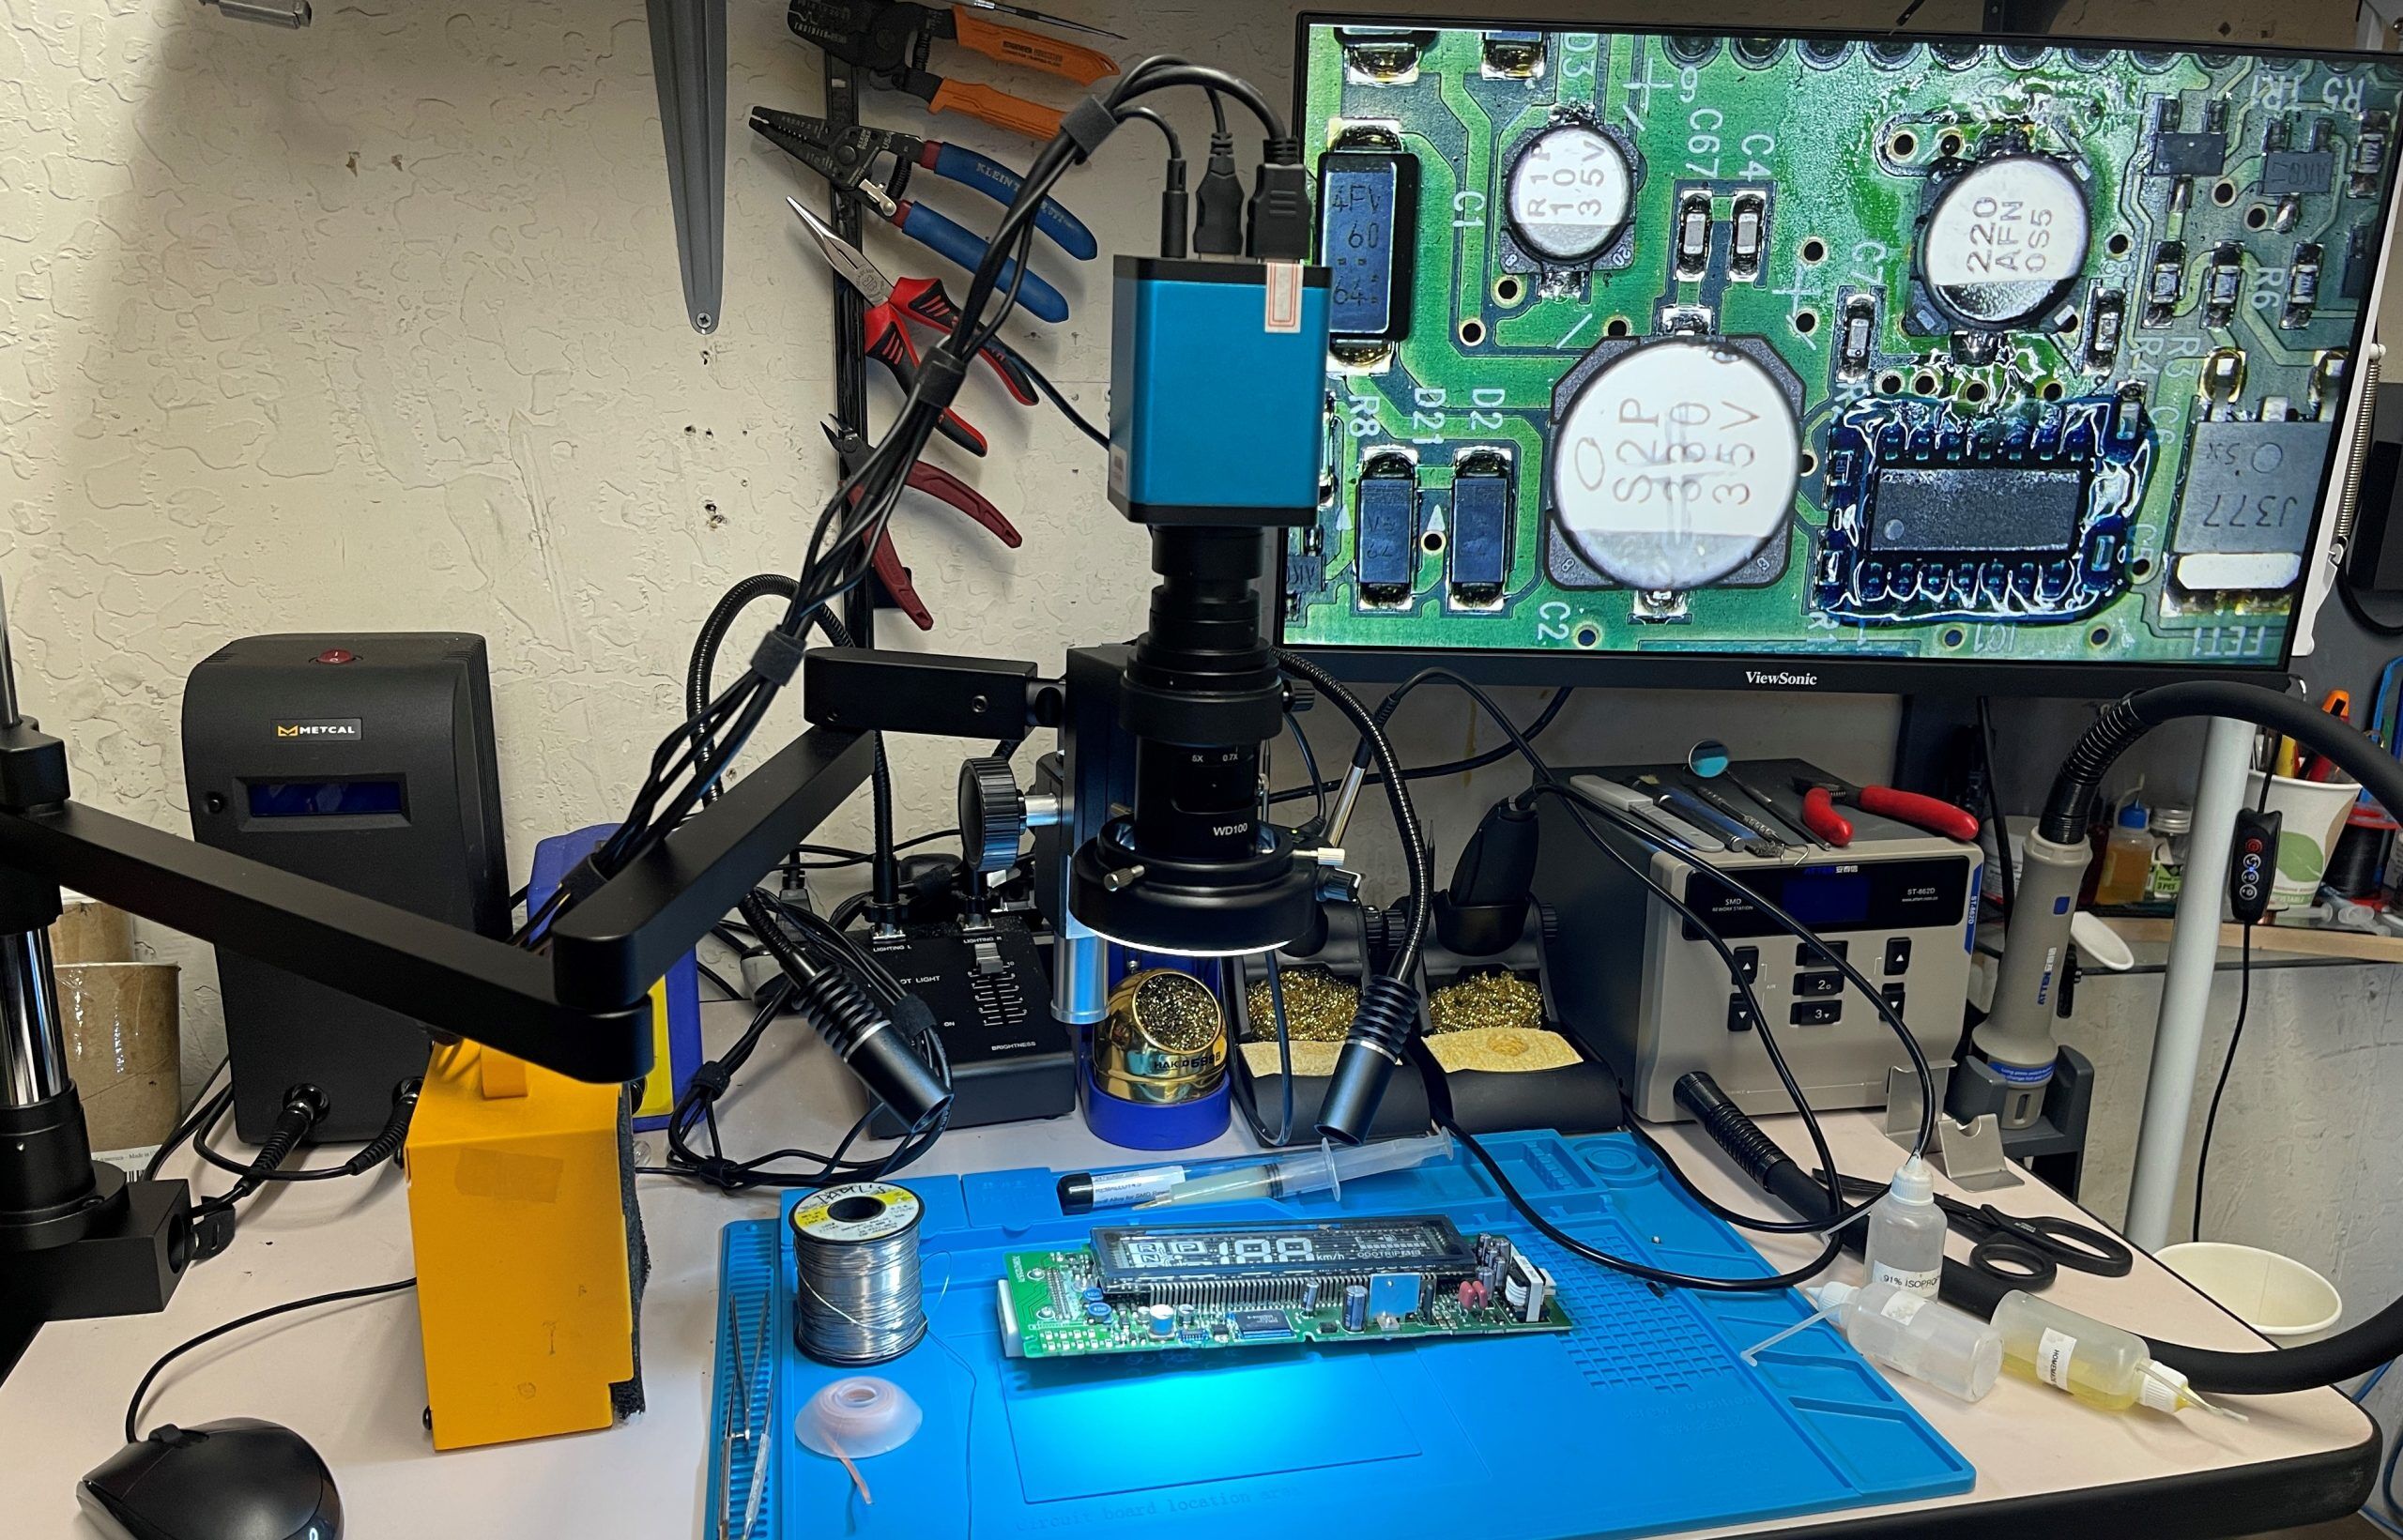 digital microscope and electronics repair bench